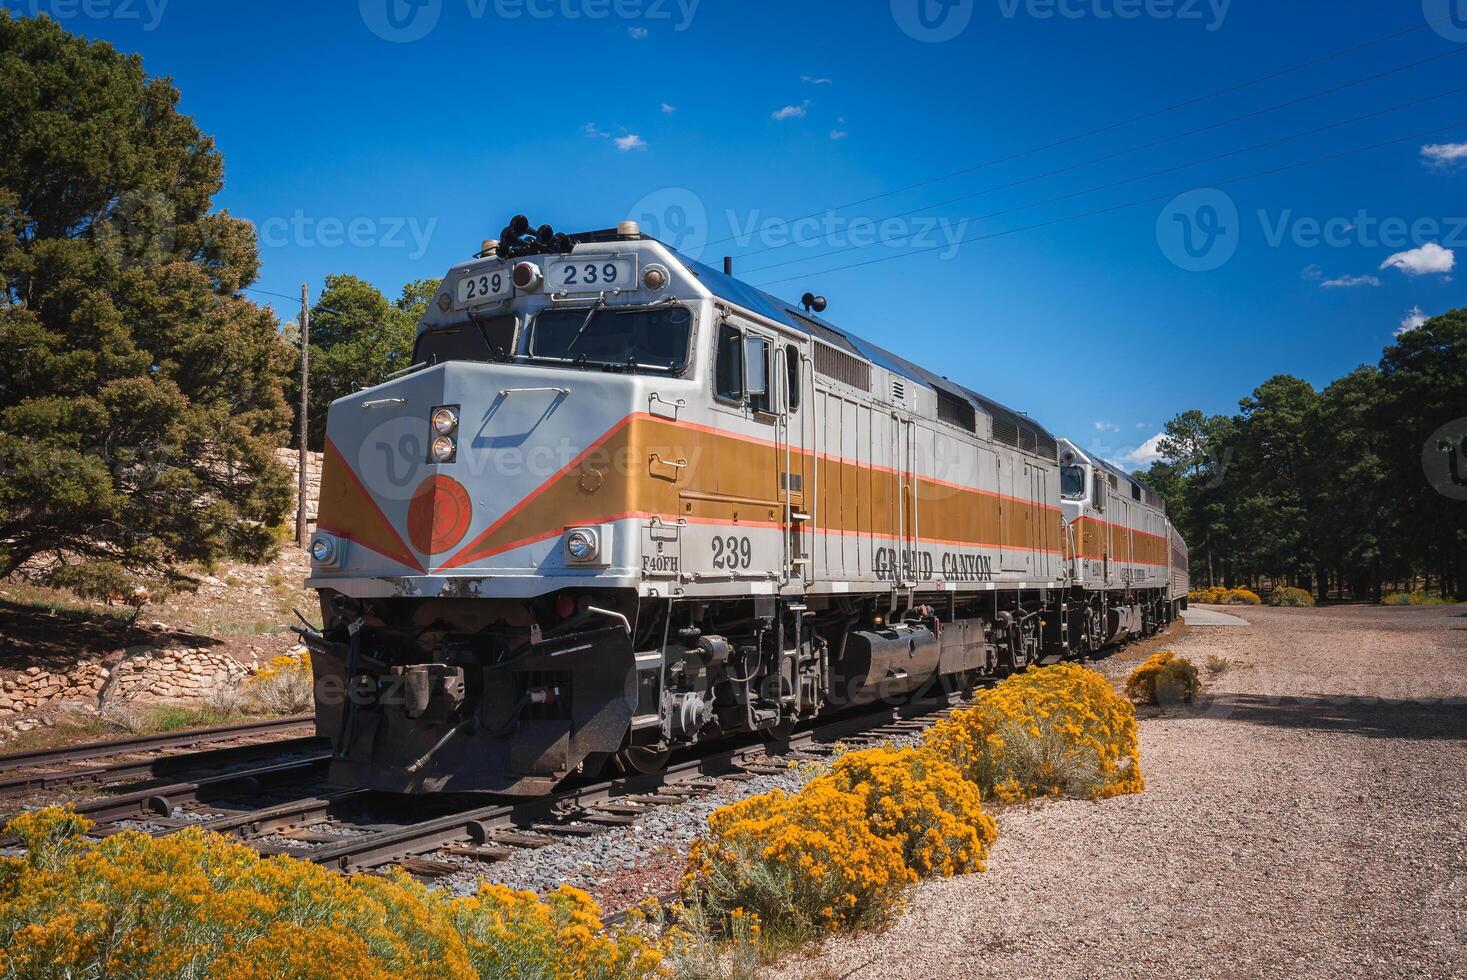 Grand Canyon Railway Train Number 239 Passing Through Nature photo